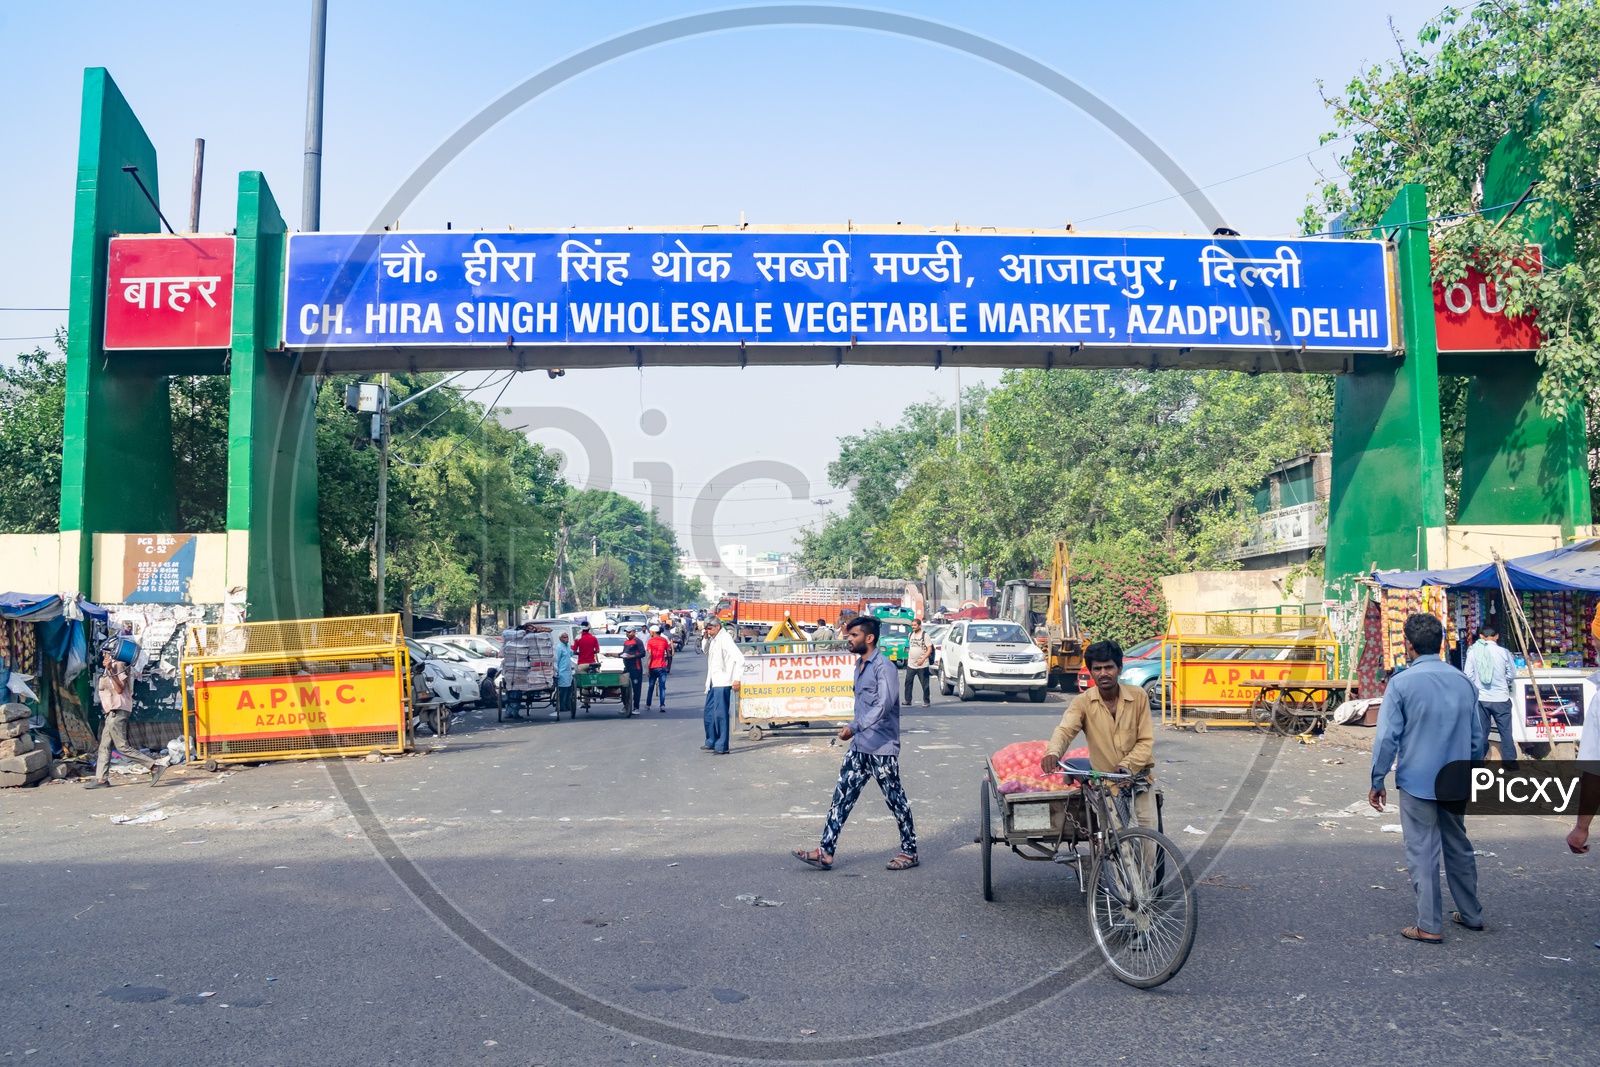 Ch. Hira Singh Wholesale Vegetable Market, New Sabzi Mandi, Azadpur, Delhi